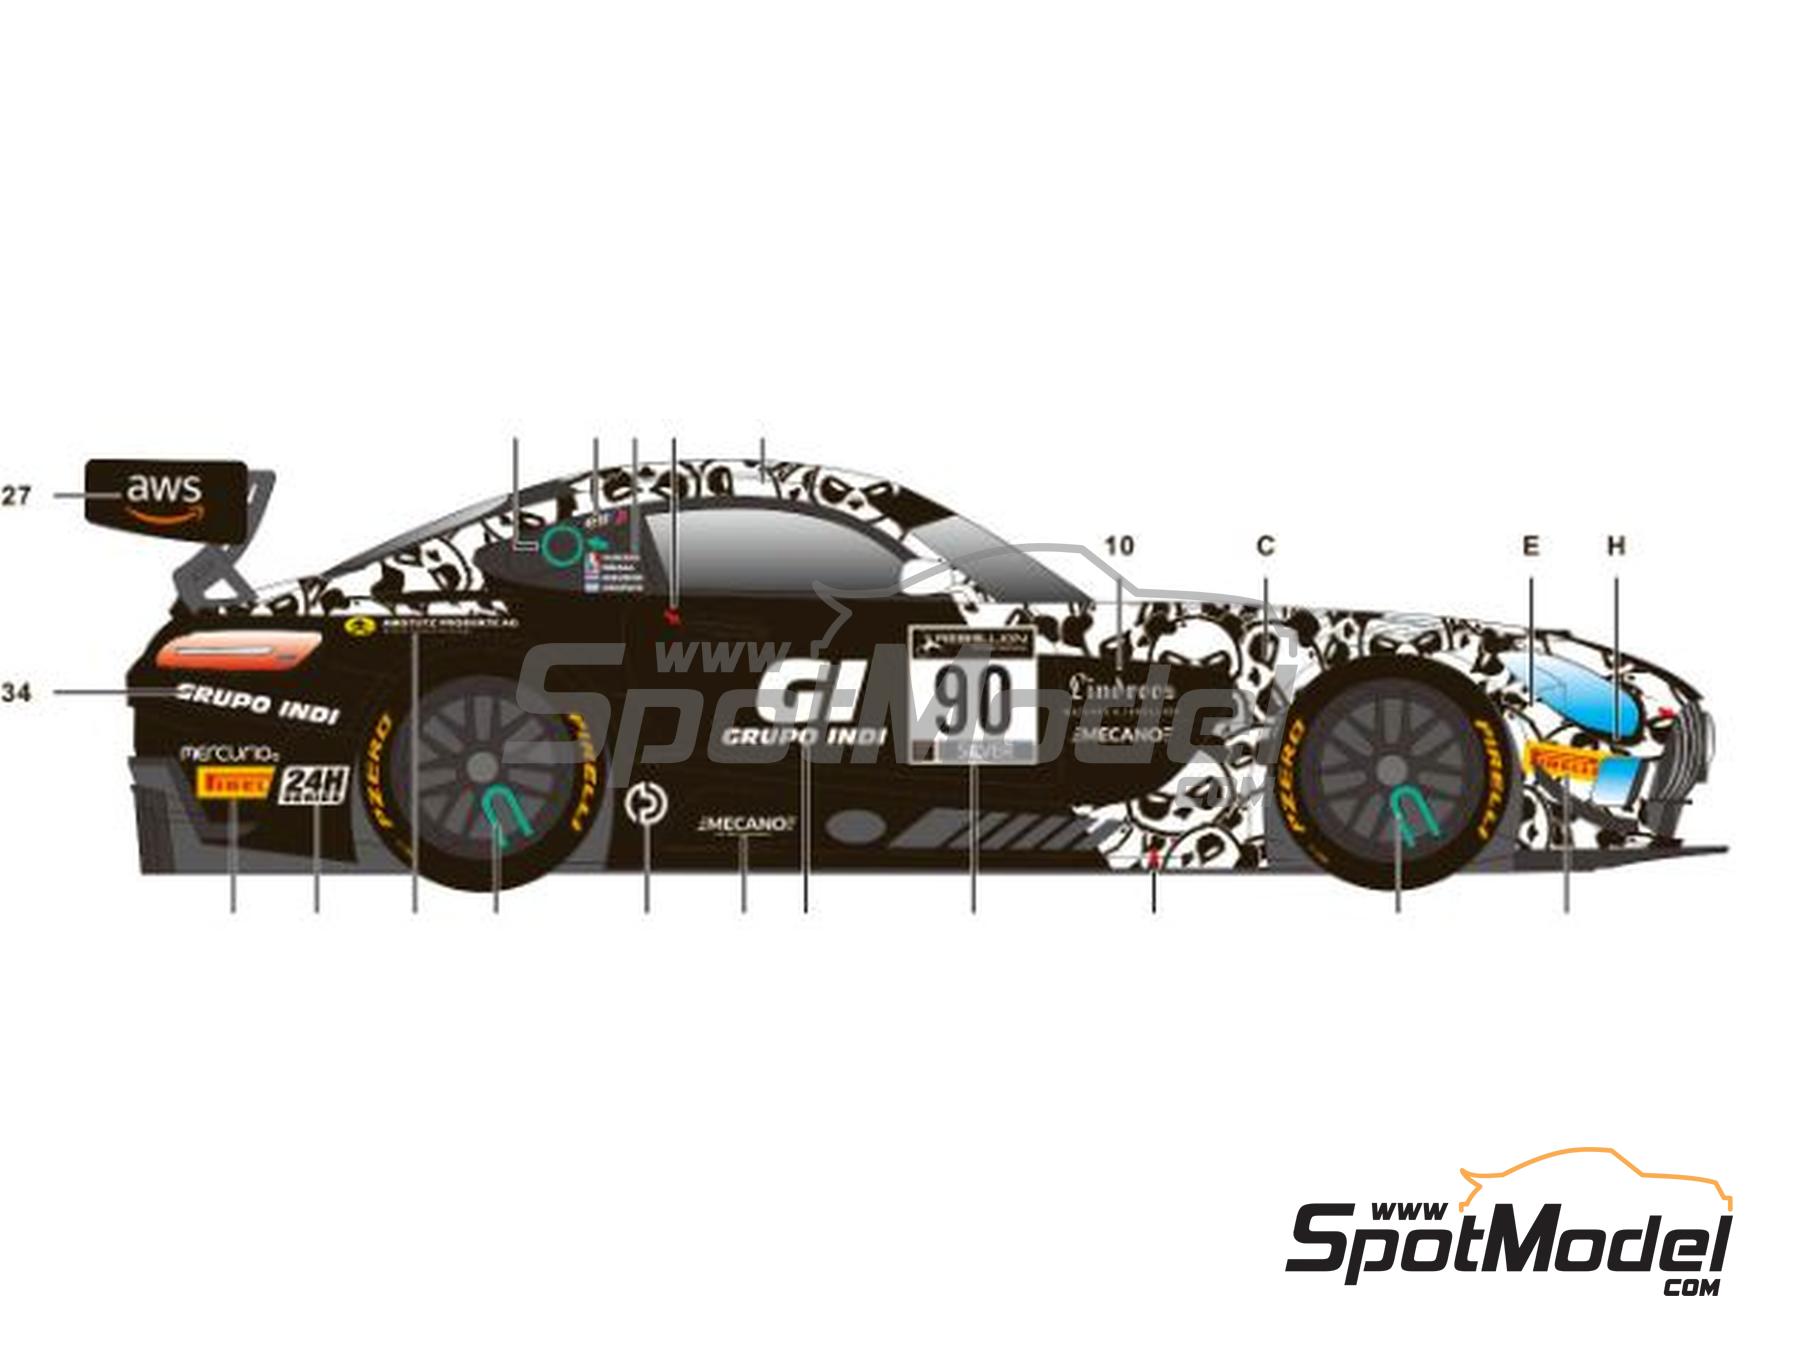 Mercedes AMG GT3 Evo Madpanda Motorsport Team sponsored by GI Grupo Indi -  TotalEnergies 24 hours of Spa 2021. Marking / livery in 1/24 scale manufact